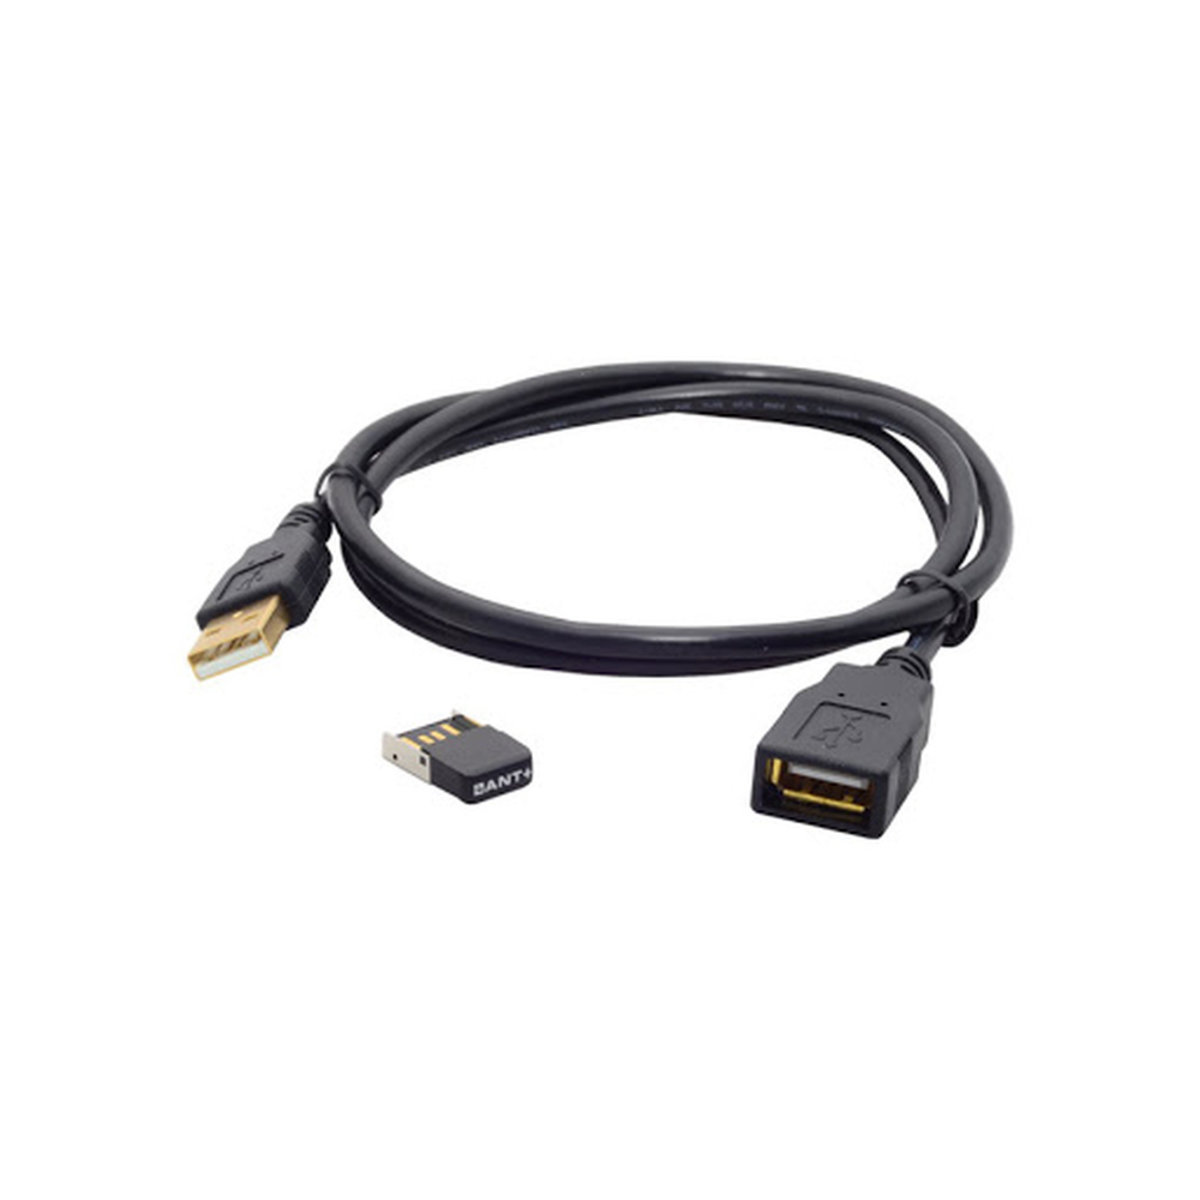 Антена USB Wahoo ANT + USB with Extension Cord - WFANTKIT1